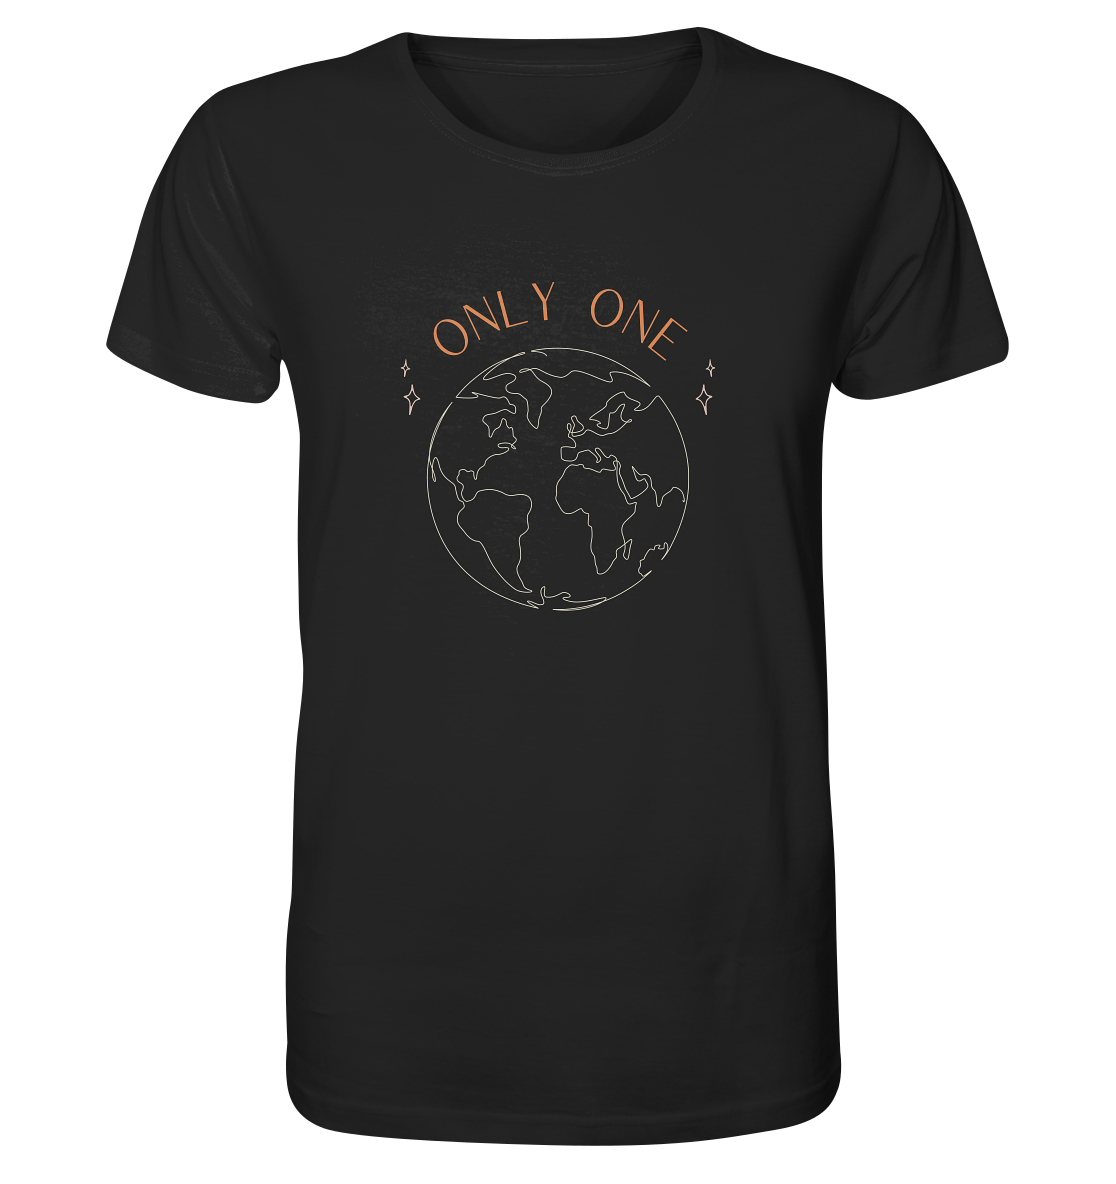 Organic vegan t-shirt saying only one earth on black 100% organic ringspun combed cotton